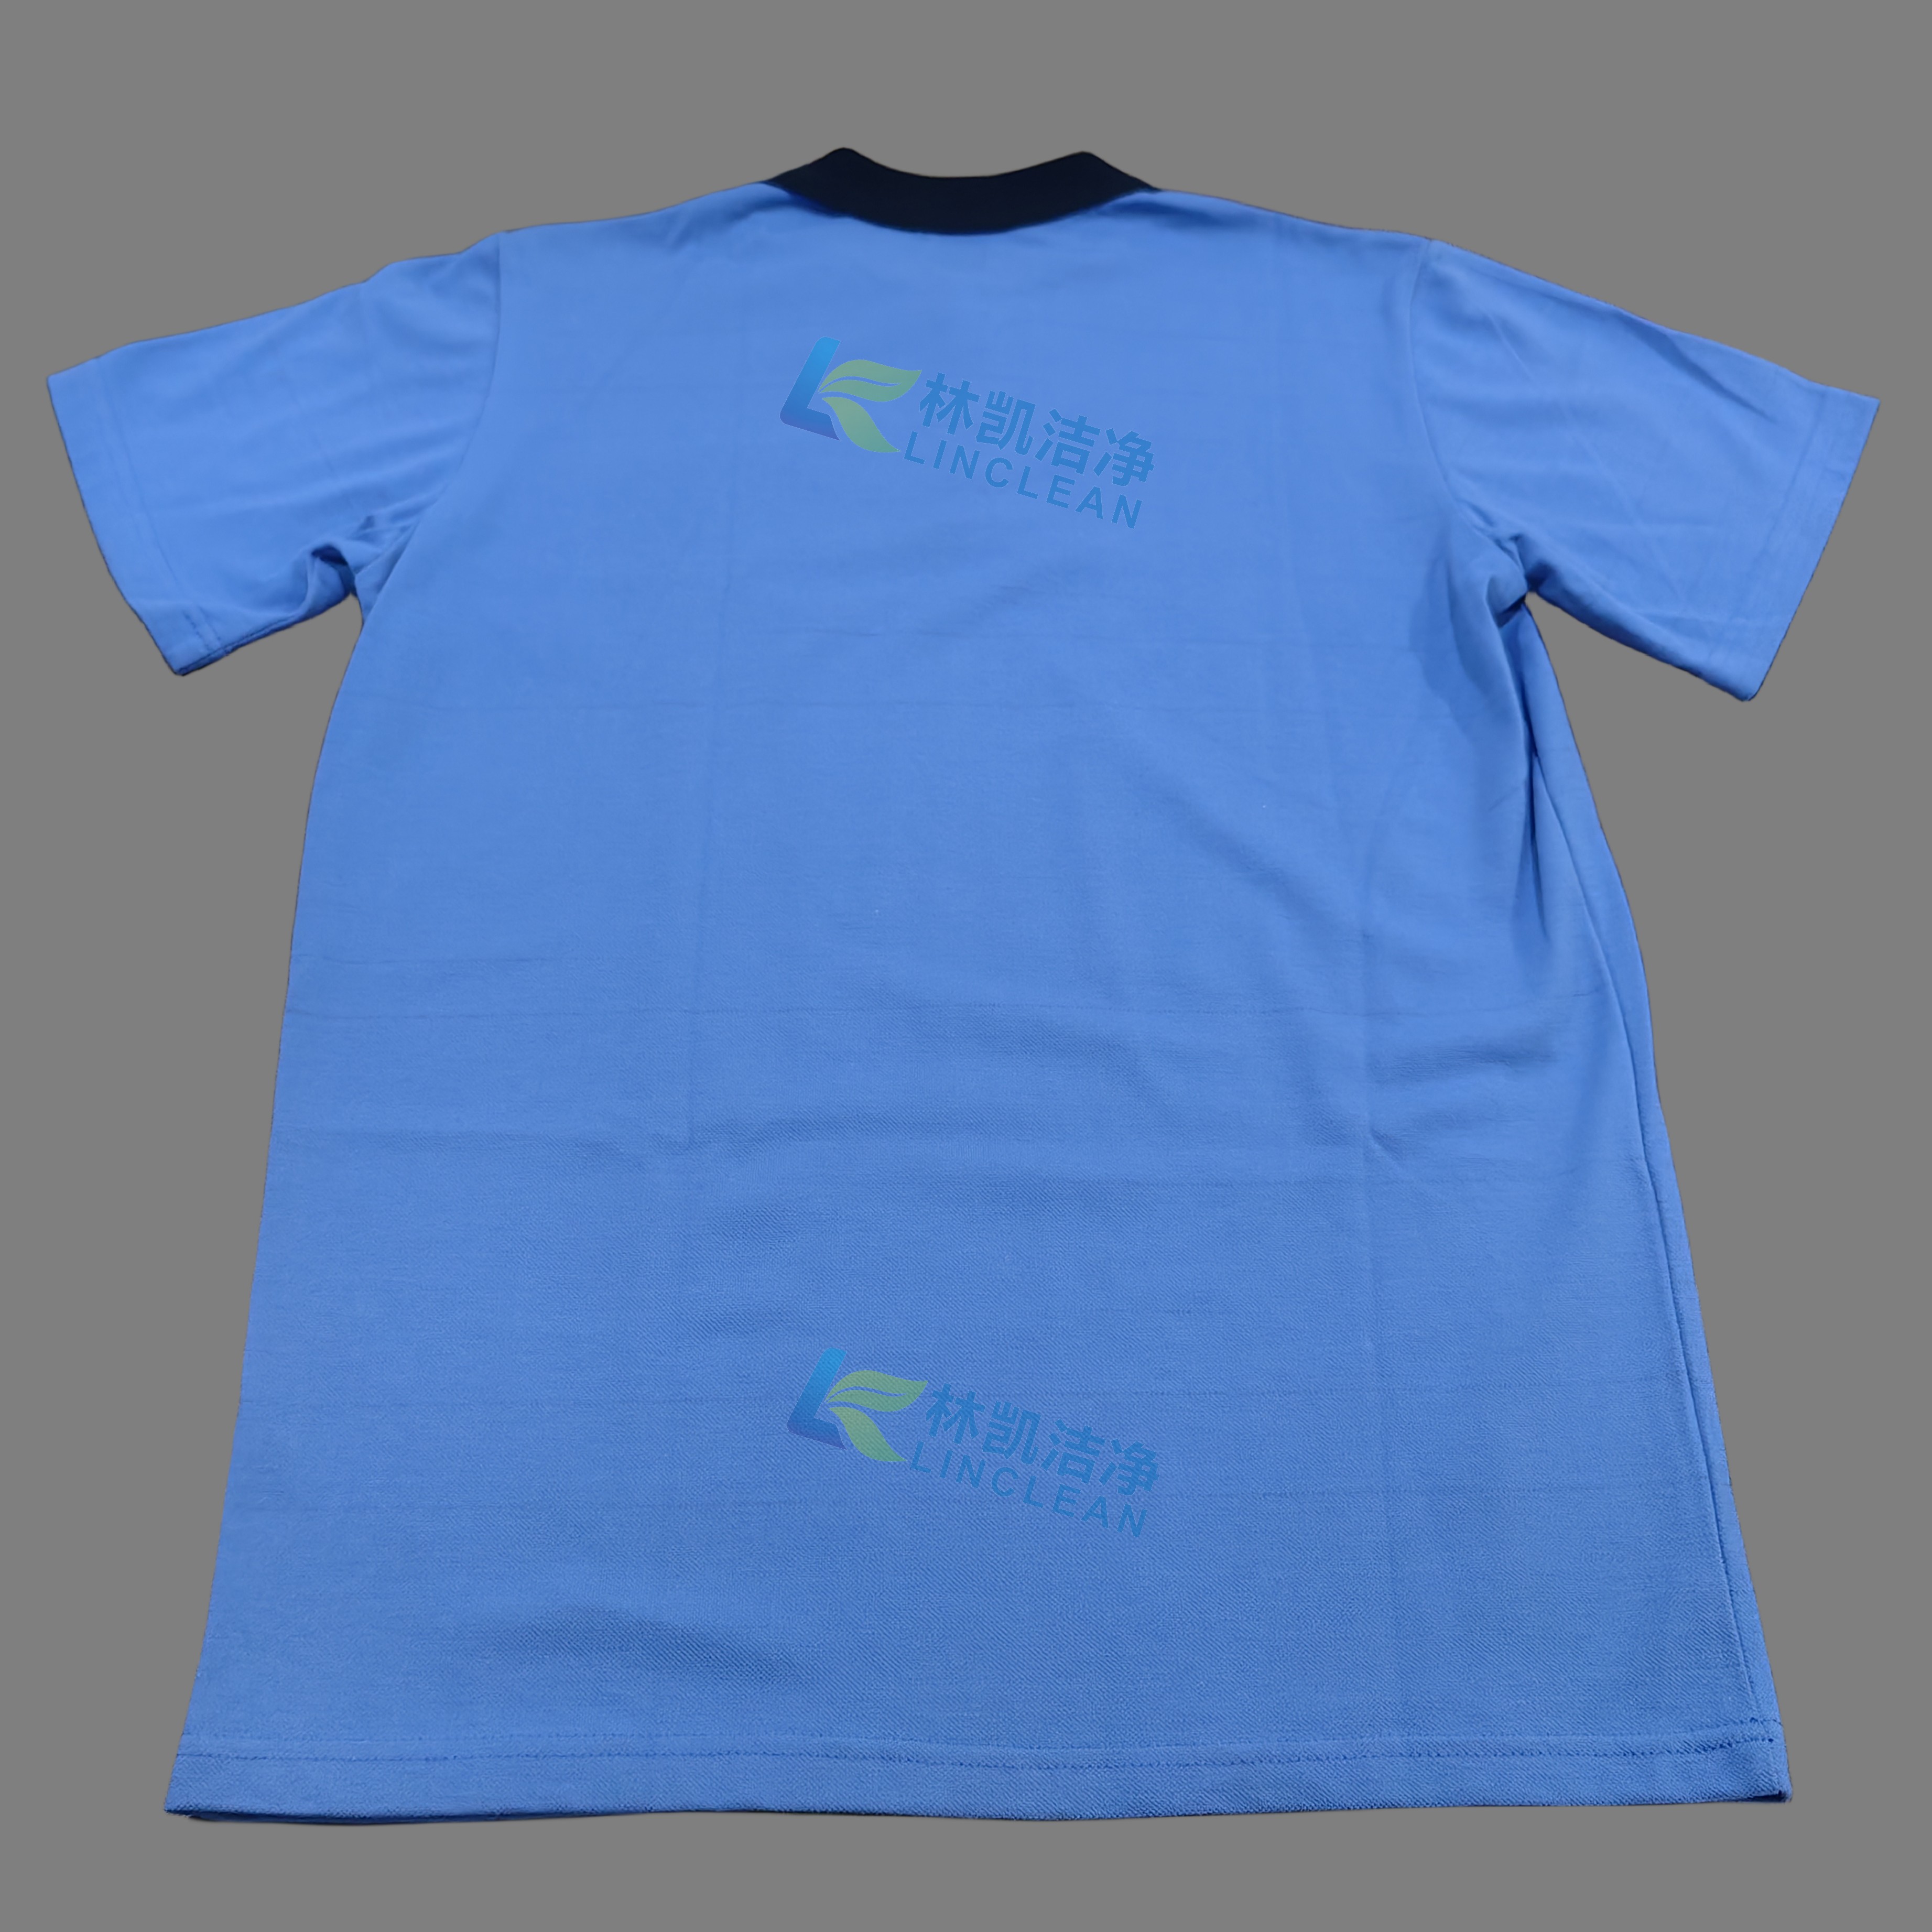 Cotton Unisex Conductive Antistatic Safety Anti-static Polo T Shirts ESD Uniform